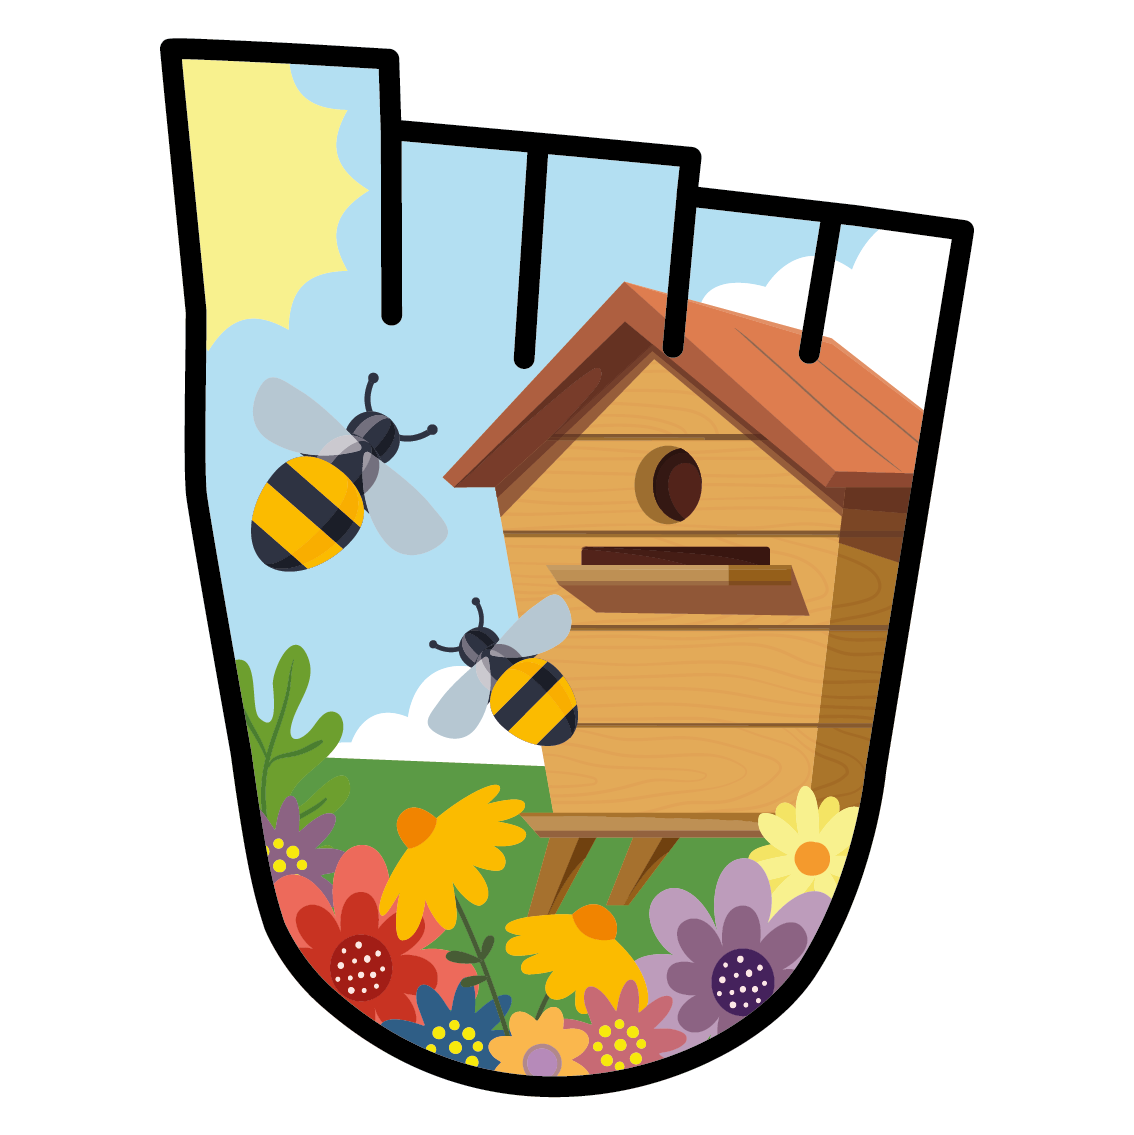 Bee badge